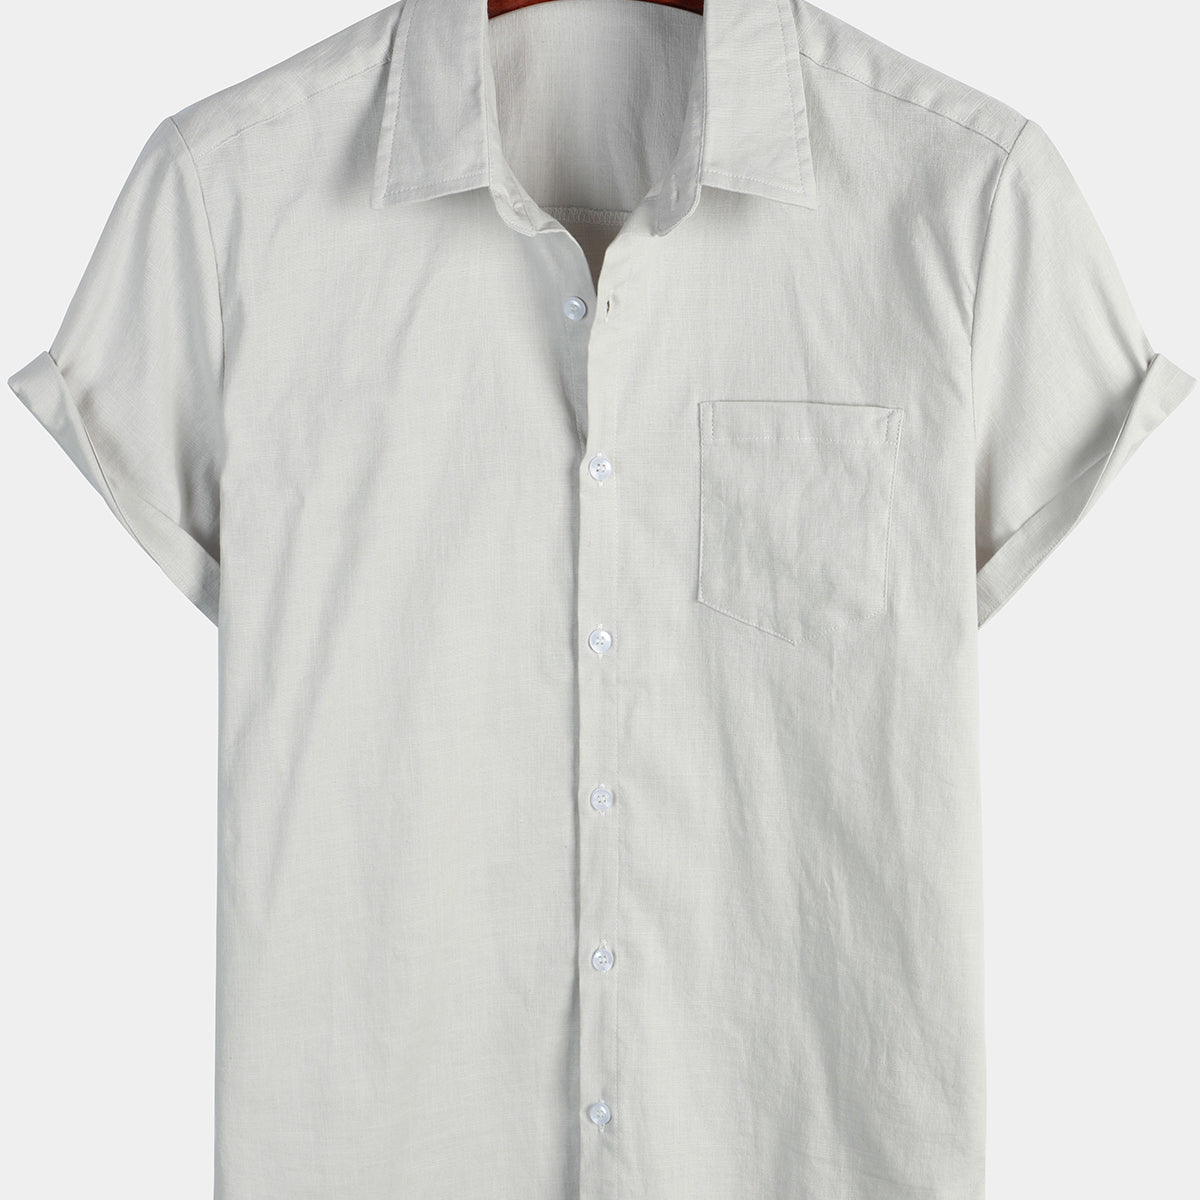 Men's Solid Color Linen Cotton Pocket Casual Short Sleeve Shirt